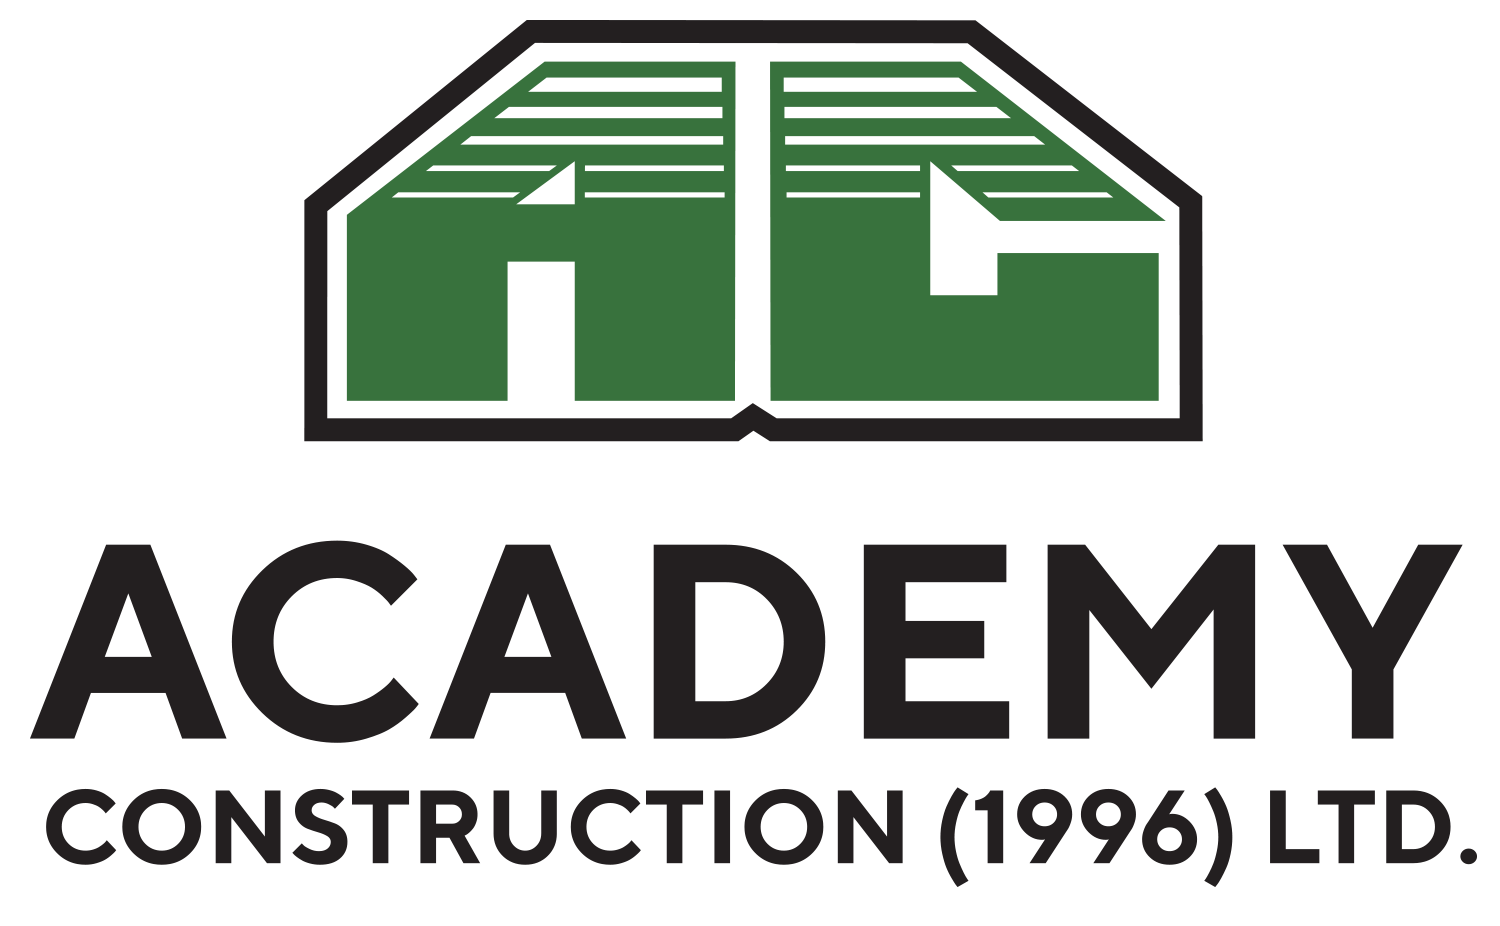 Academy Construction (1996) Ltd.